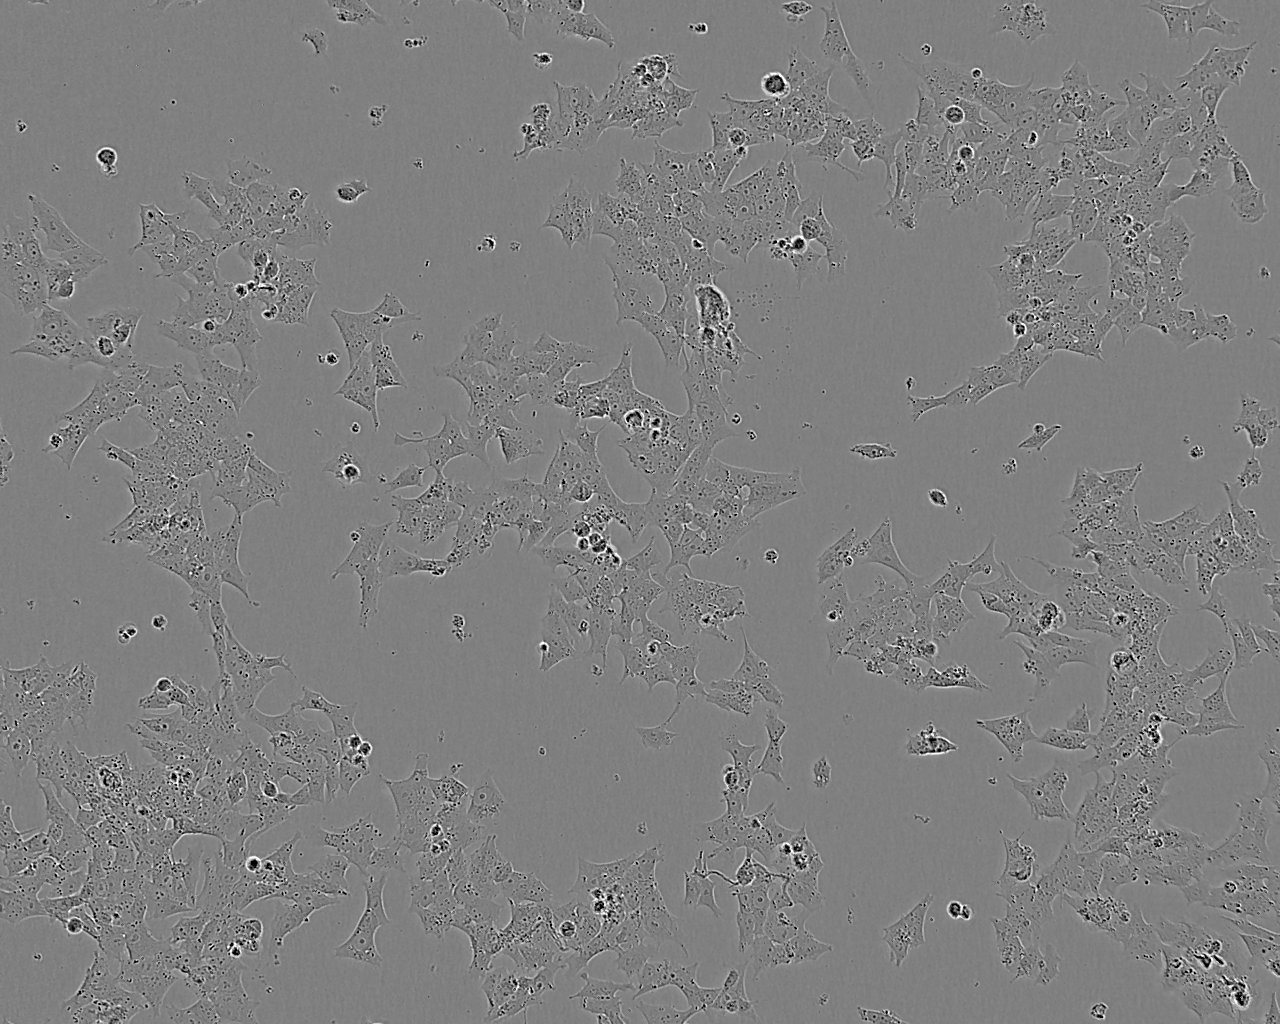 SIRC epithelioid cells兔角膜上皮细胞系,SIRC epithelioid cells